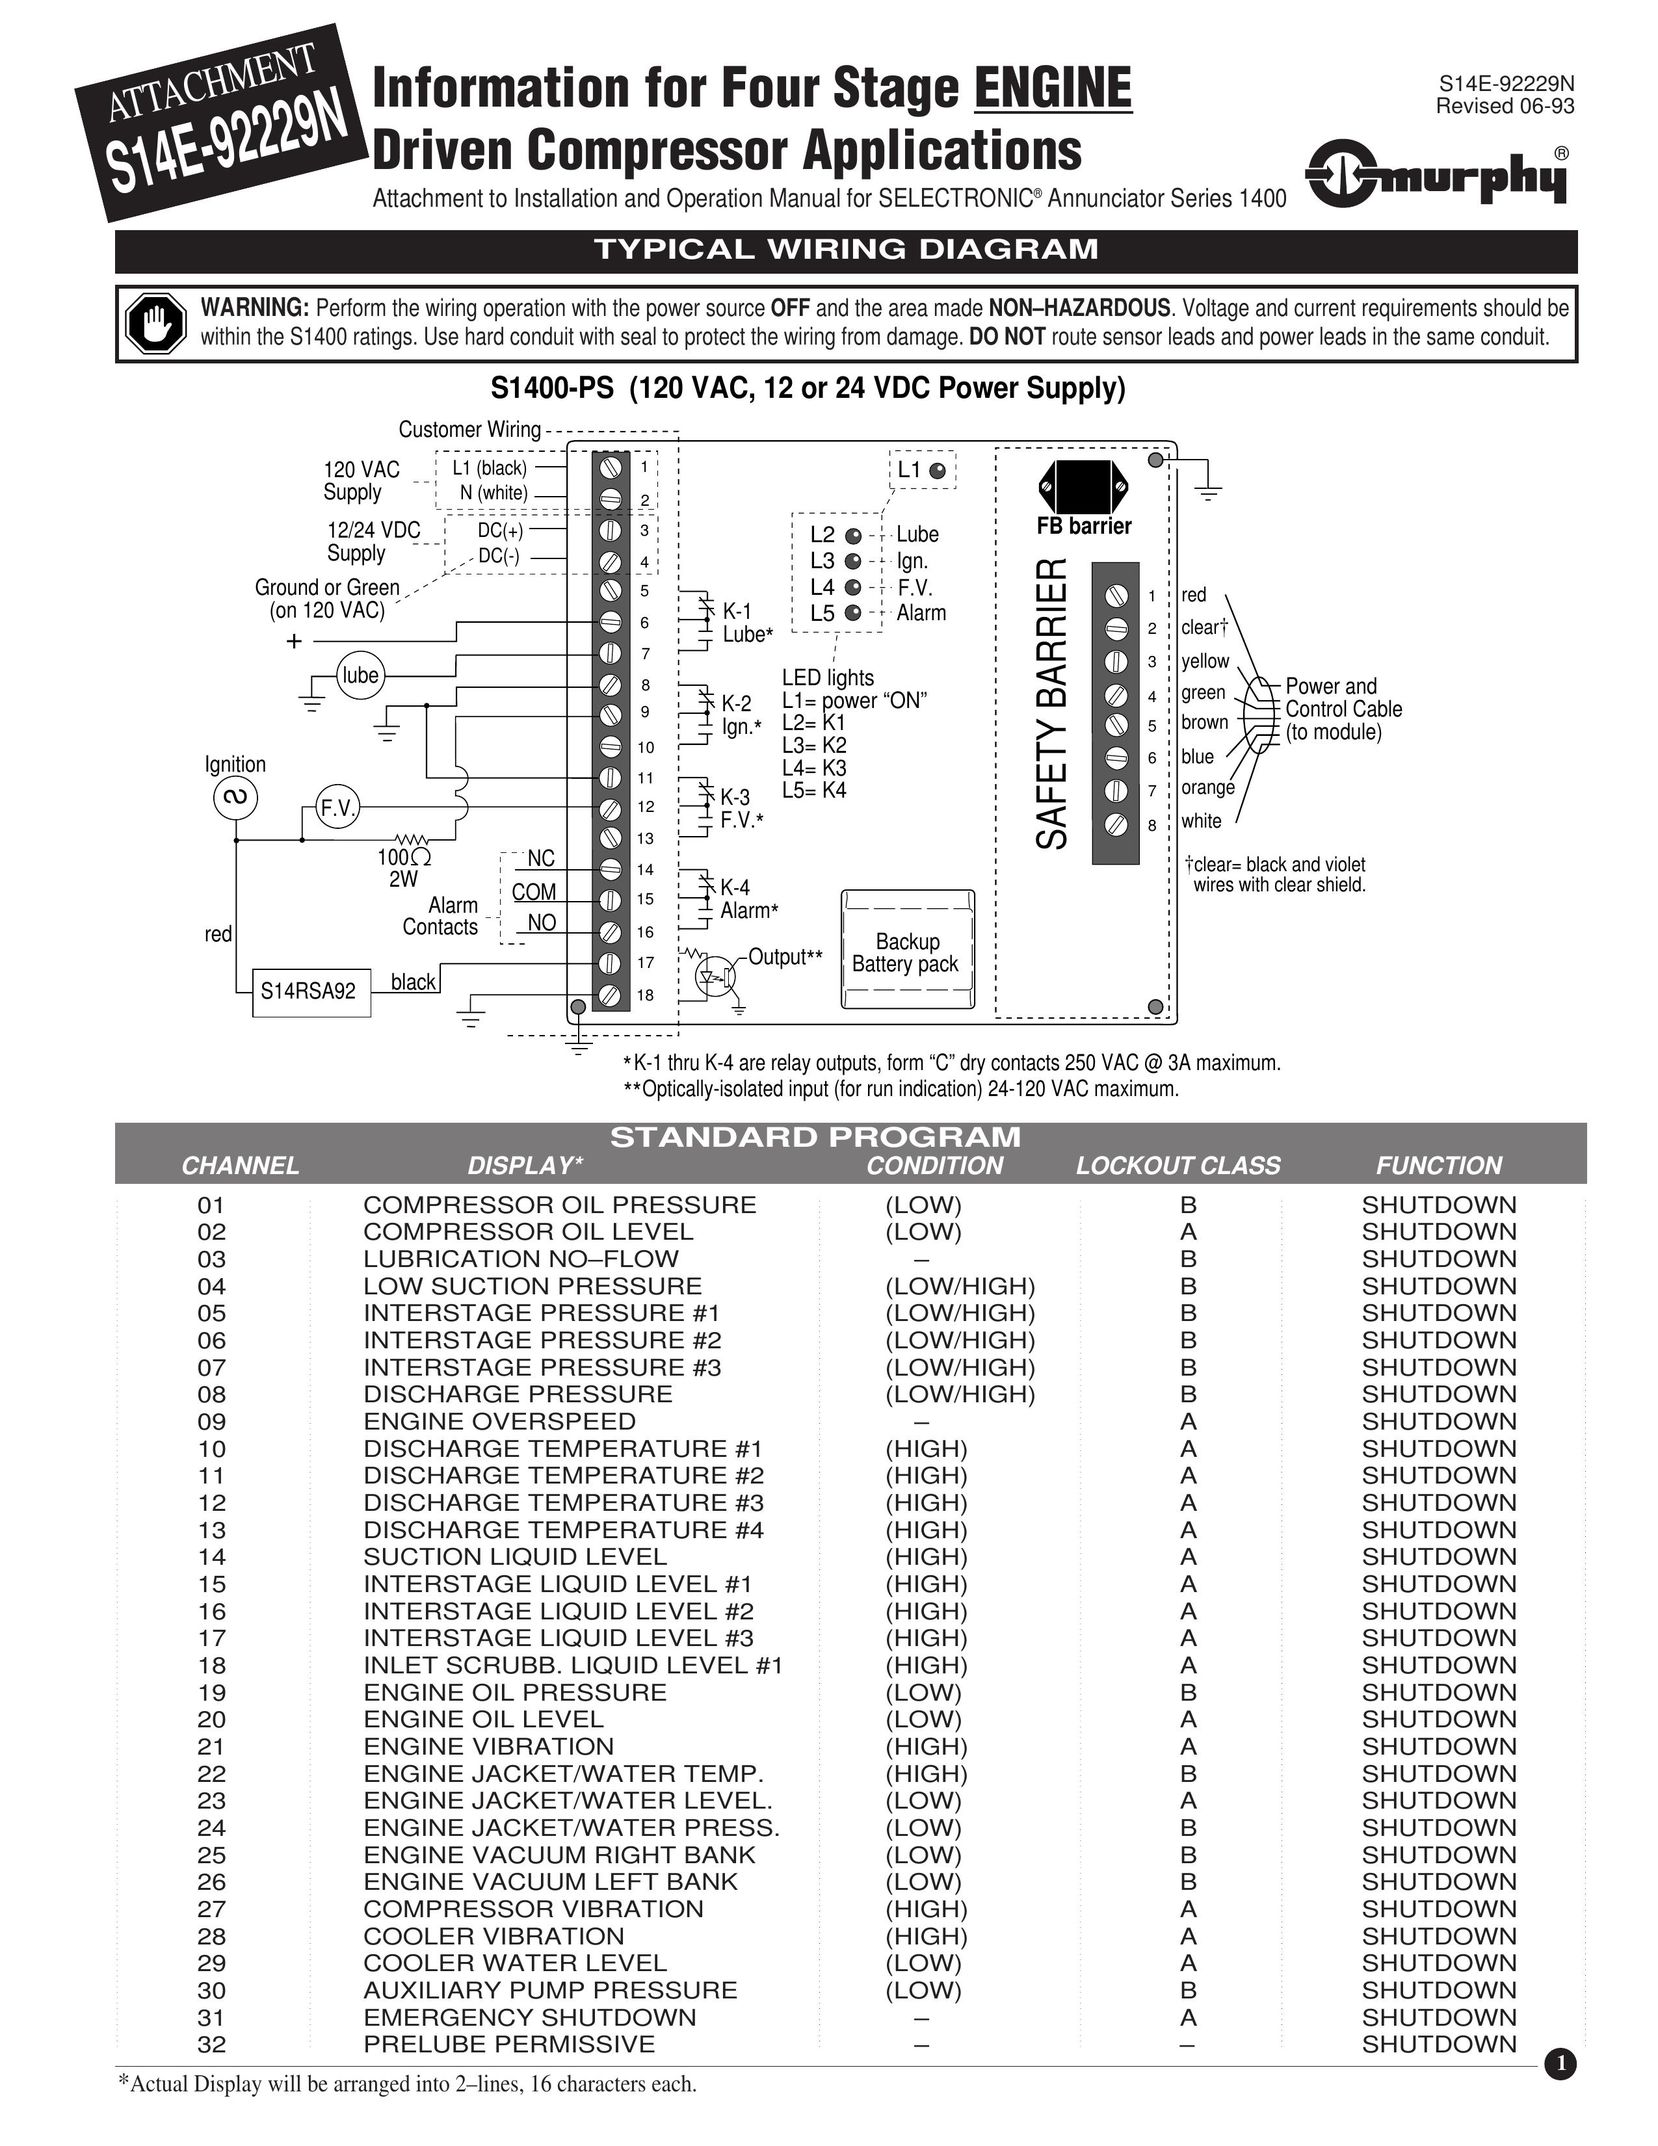 Murphy S14E-92229N Air Compressor User Manual